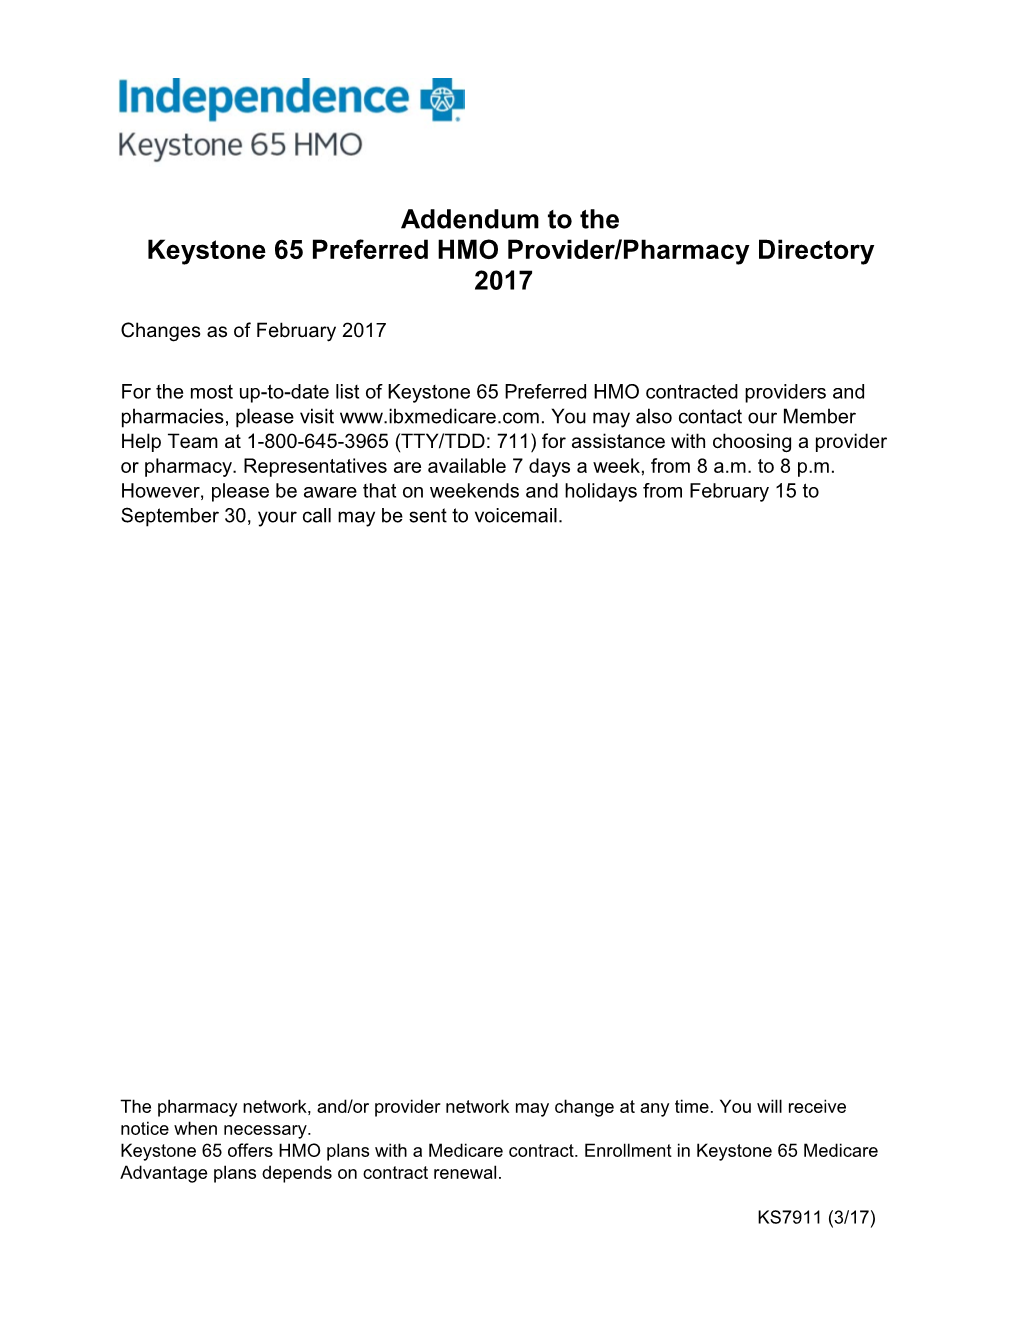 Addendum to the Keystone 65 Preferred HMO Provider/Pharmacy Directory 2017